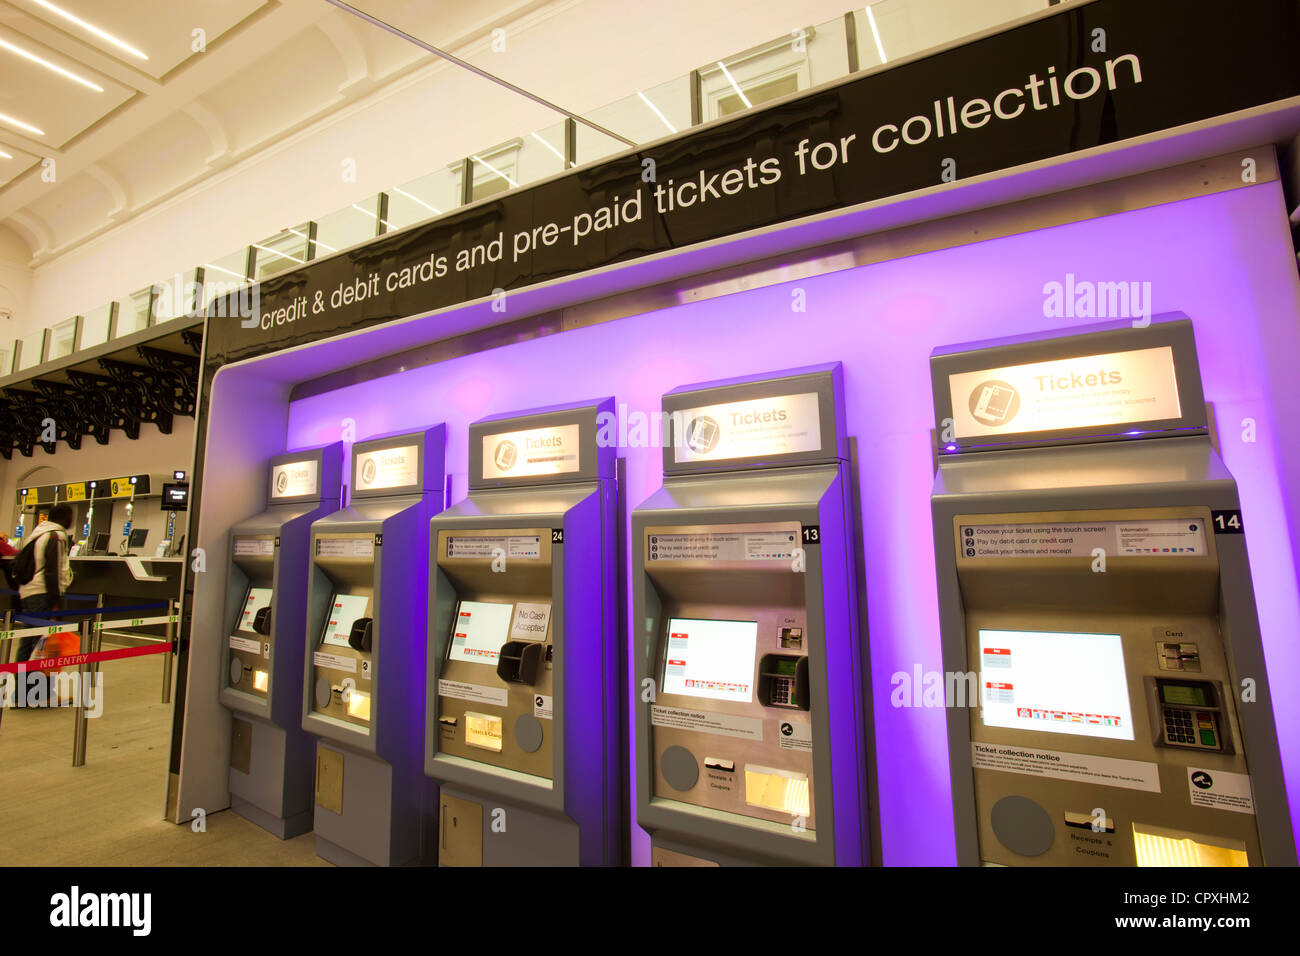 Automatisierte Ticket Dispenser in St Pancras Station, London, UK. Stockfoto